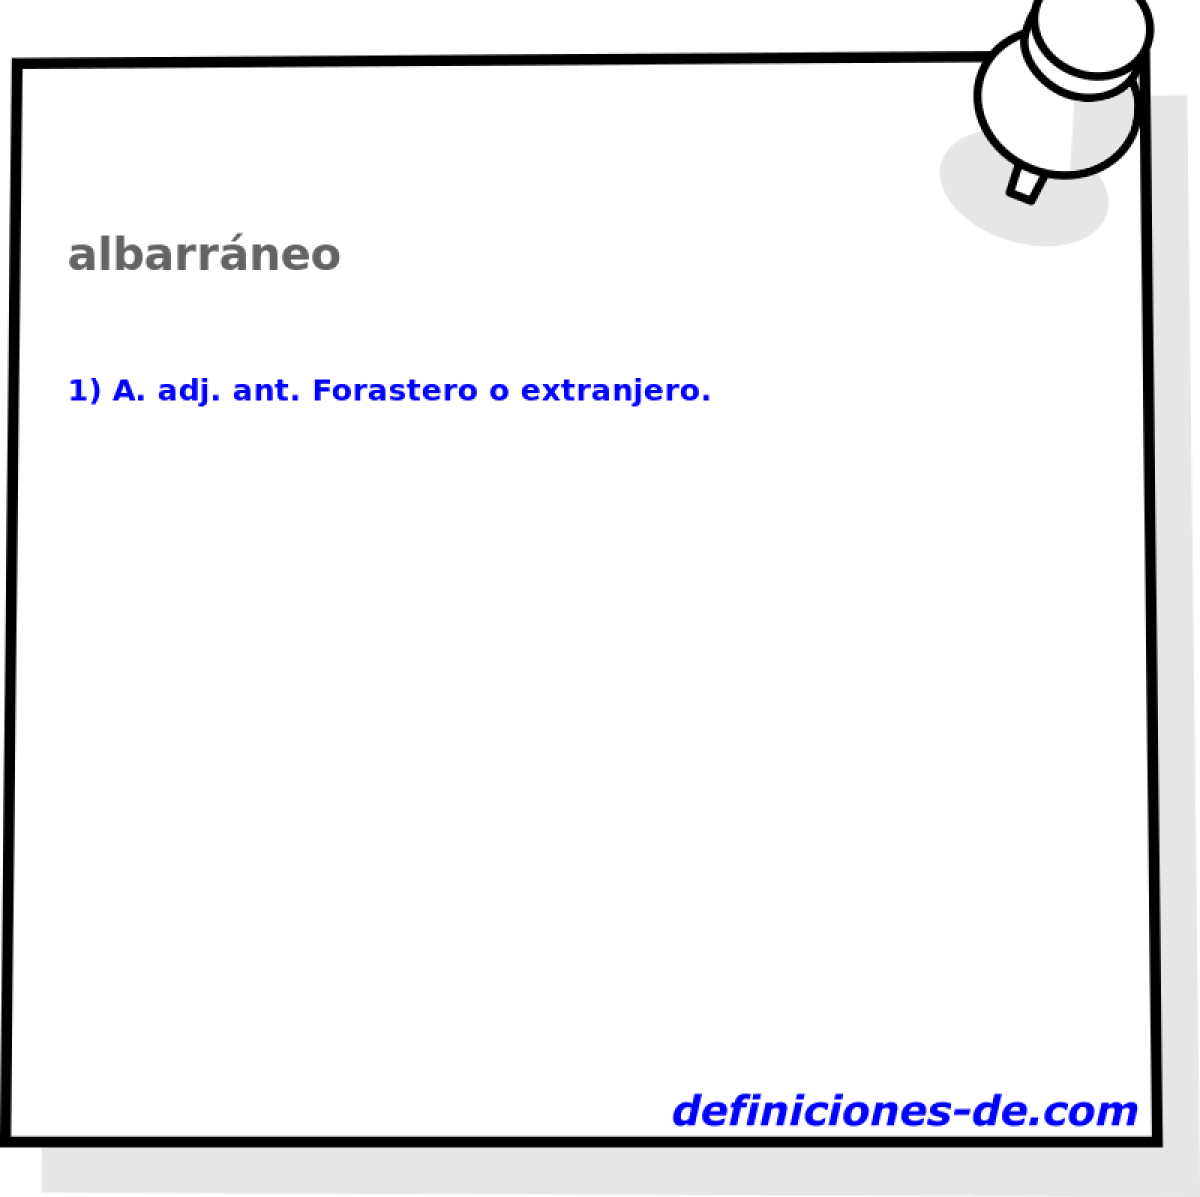 albarrneo 